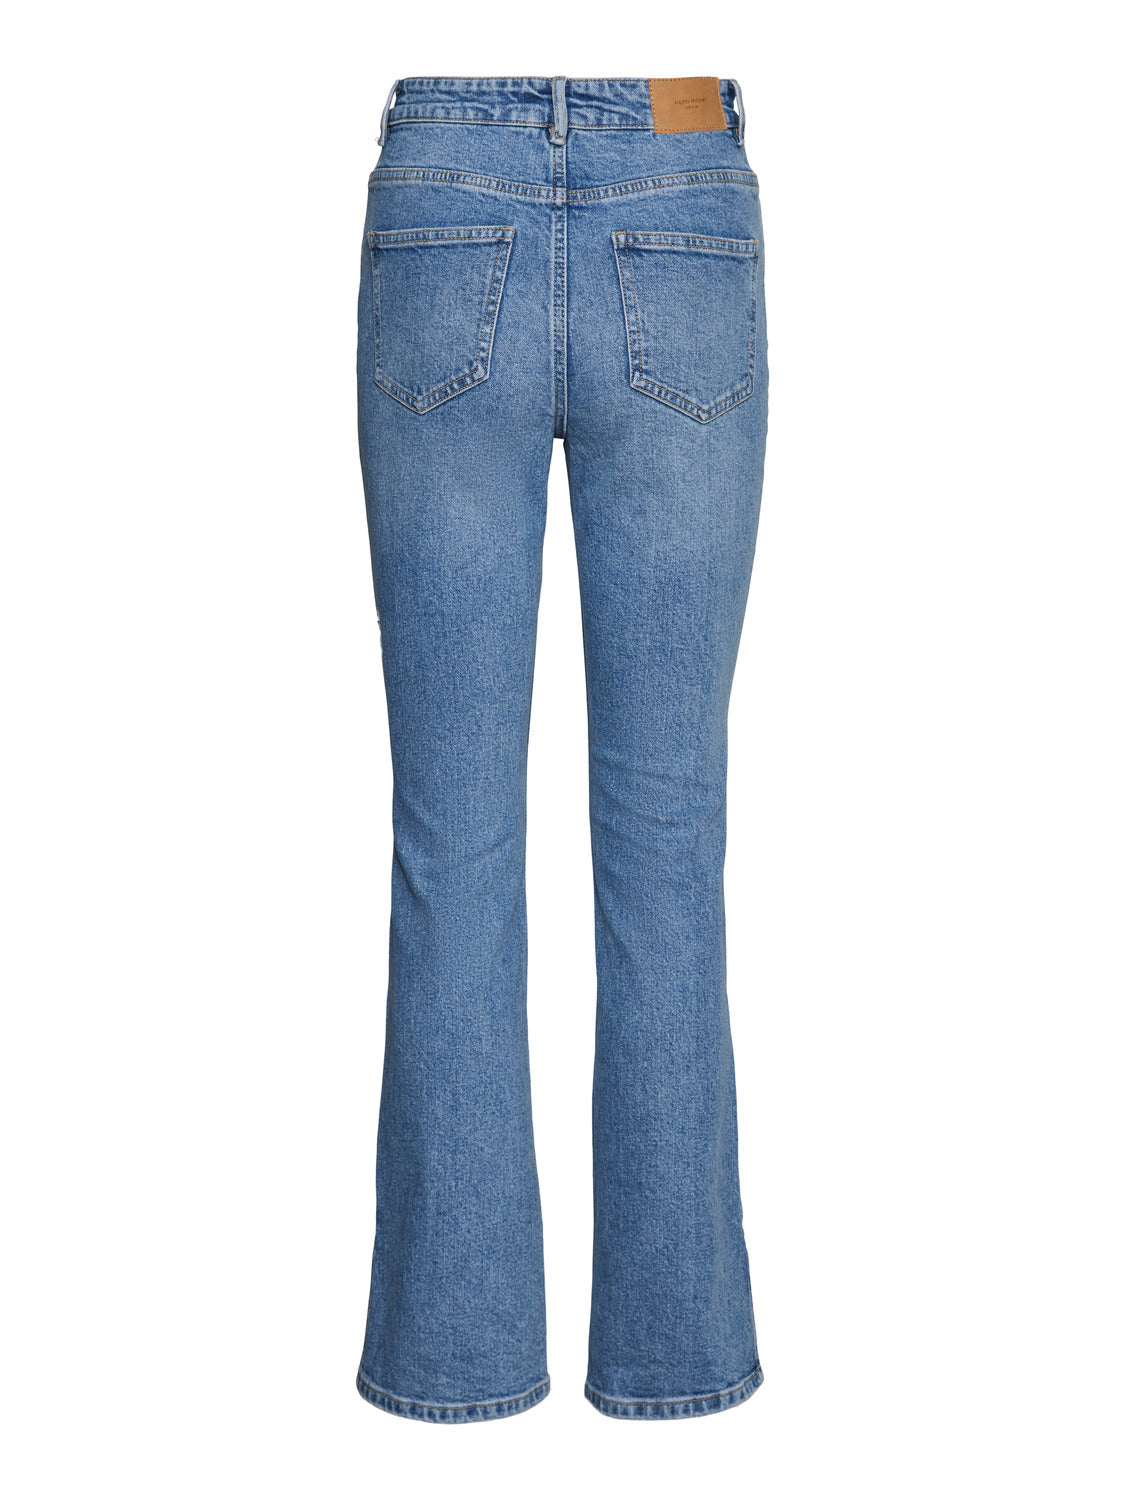 VMSELMA Jeans - Light Blue Denim